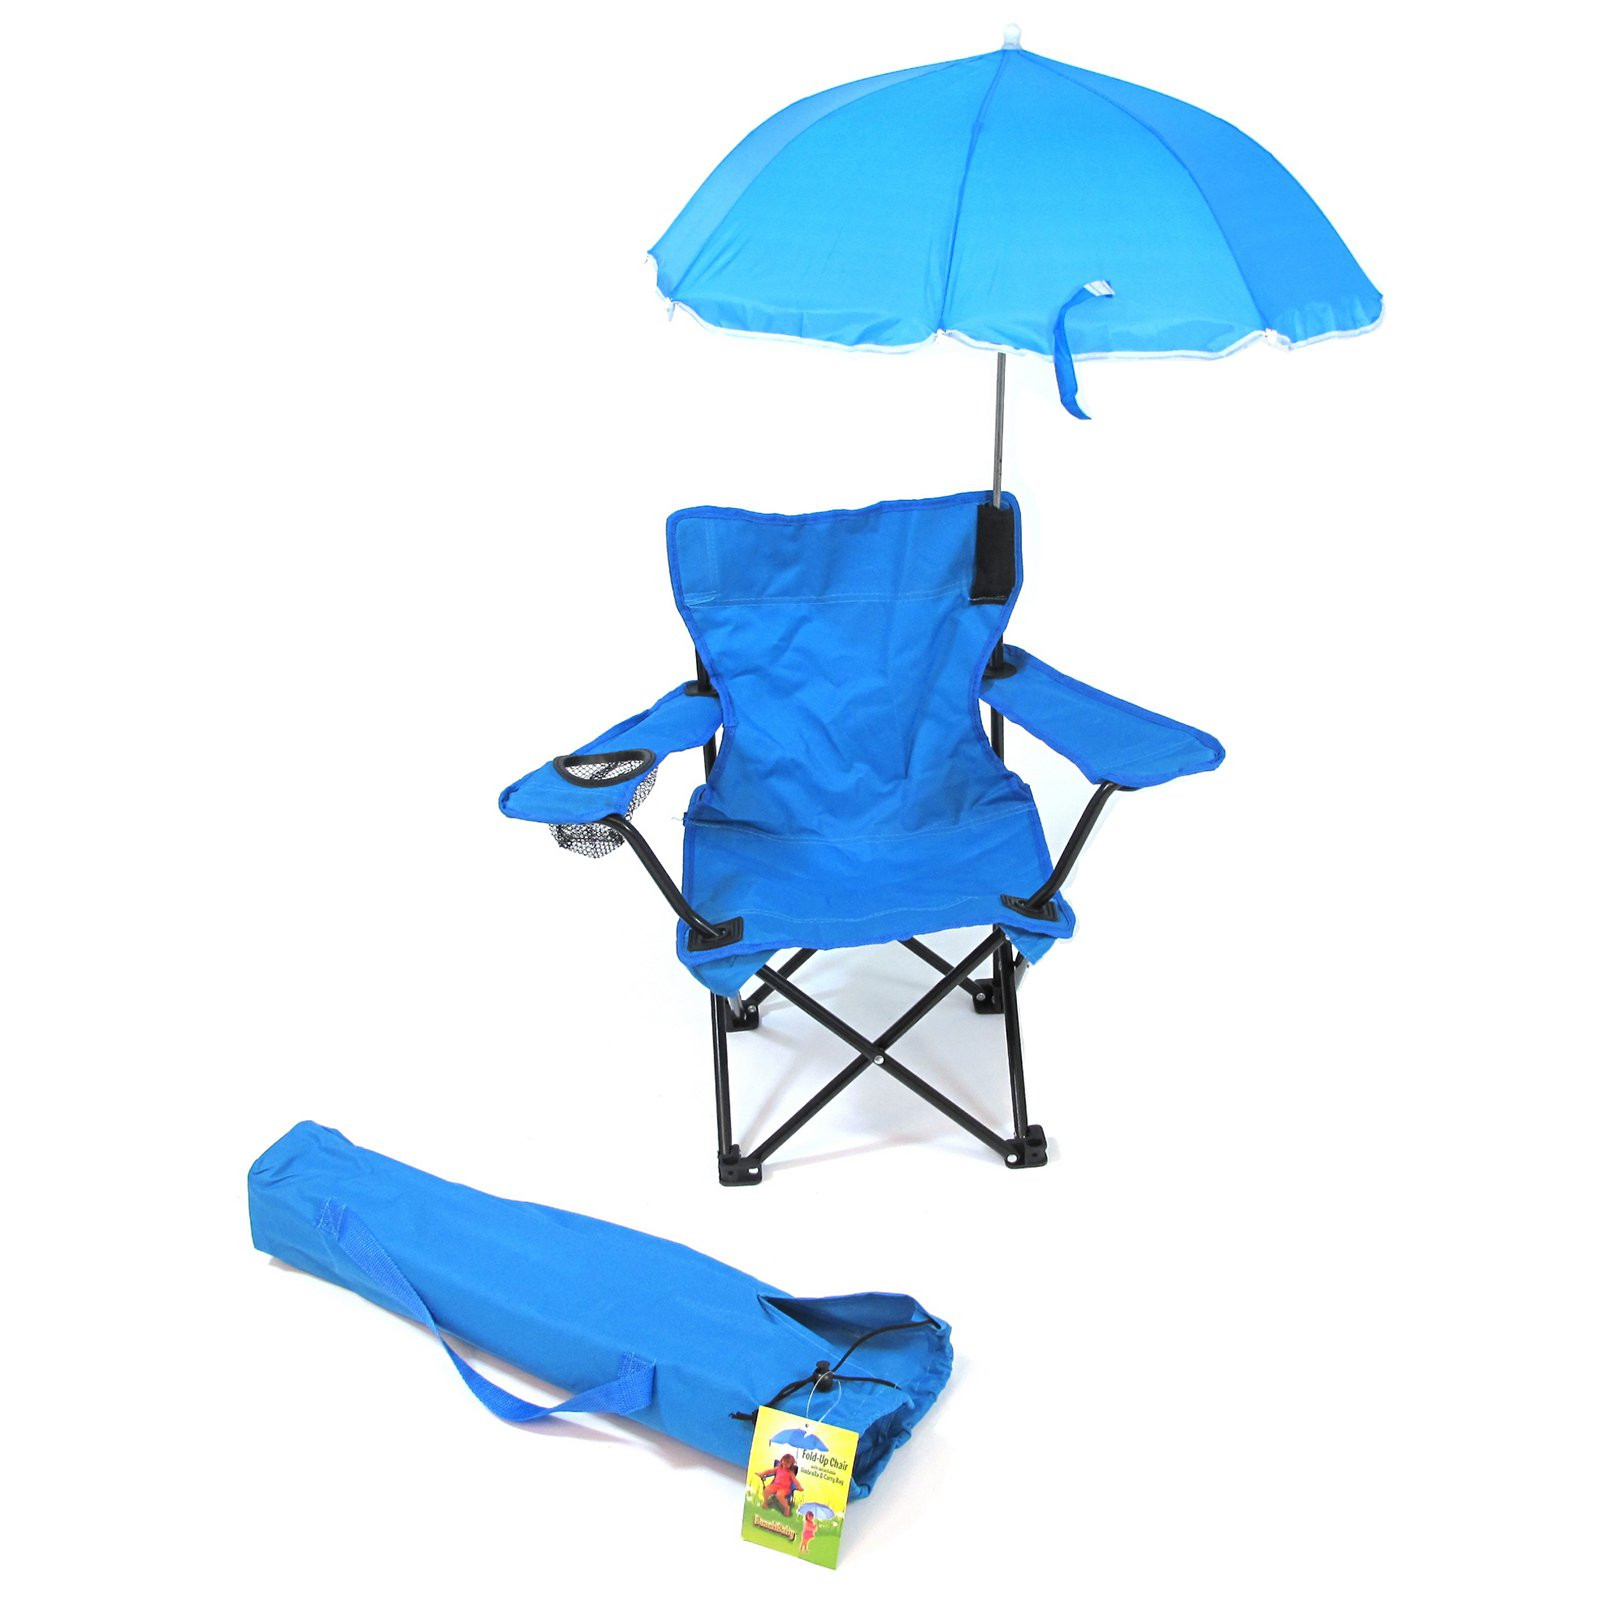 Kids Beach Chair With Umbrella Beautiful Beach Baby Kids Camp Chair With Umbrella Kids Outdoor Of Kids Beach Chair With Umbrella 